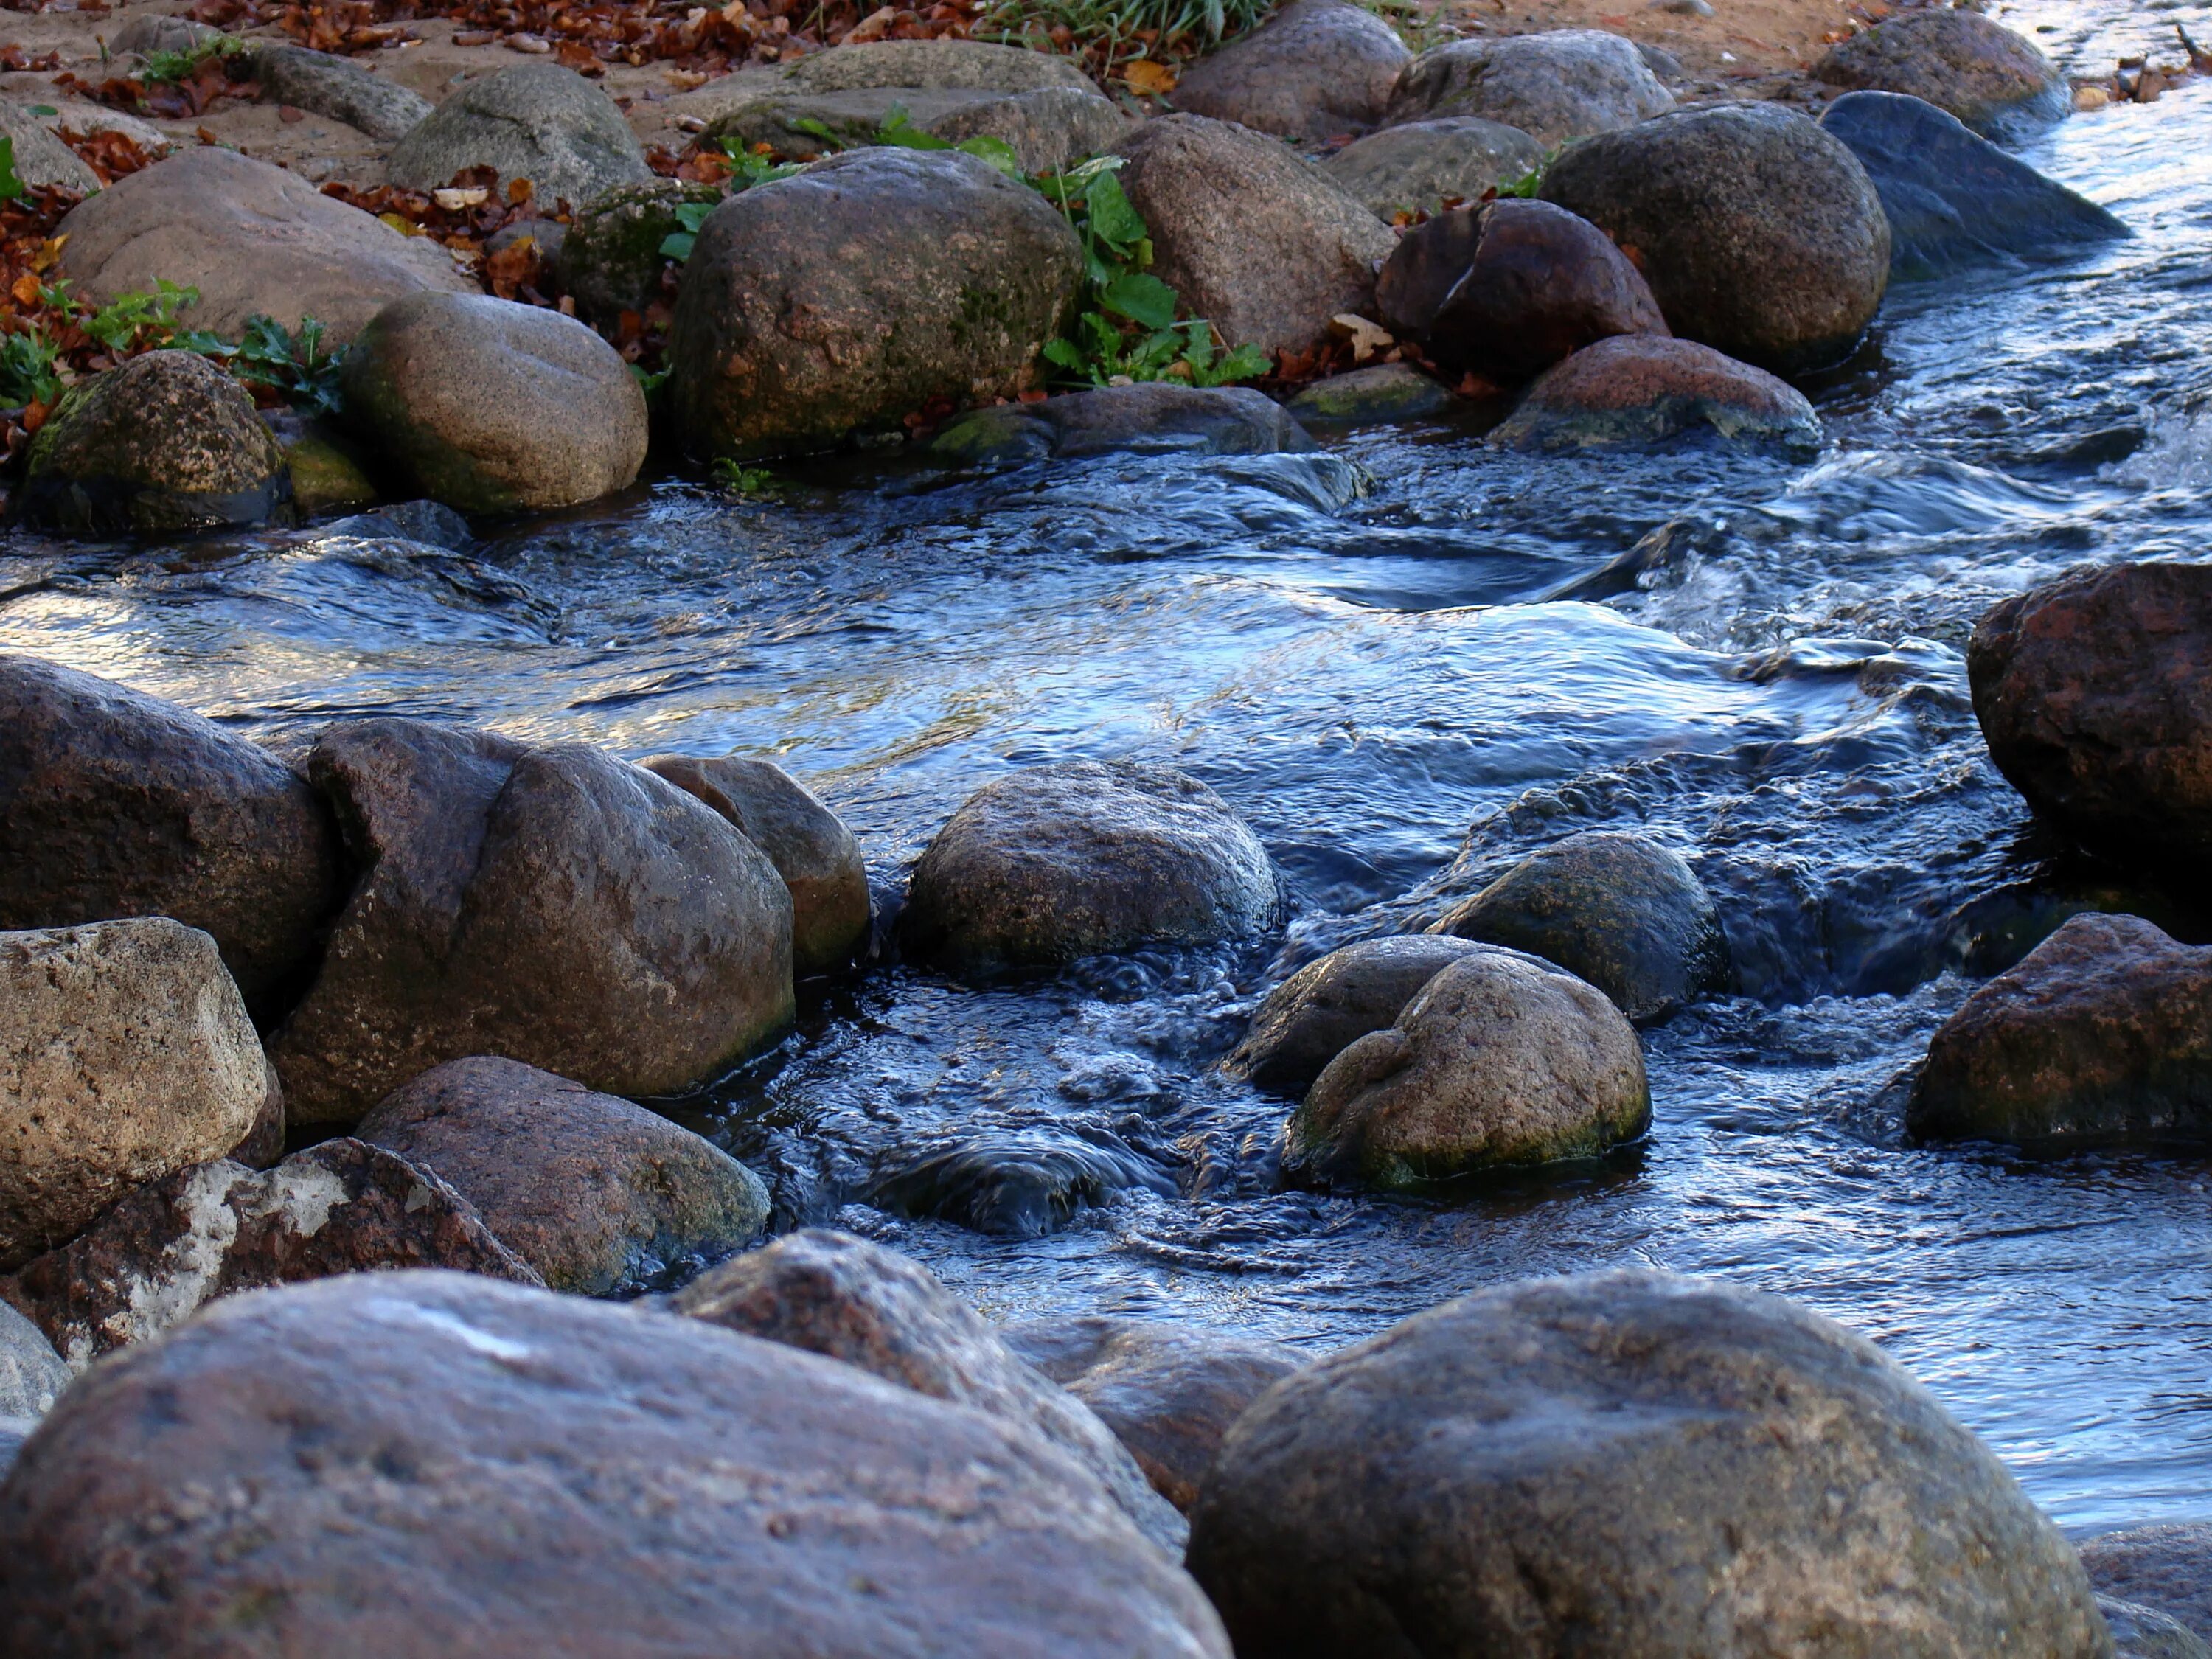 Stone river. Река Убин. Валуны у реки. Каменный берег реки. Ручей с камнями.